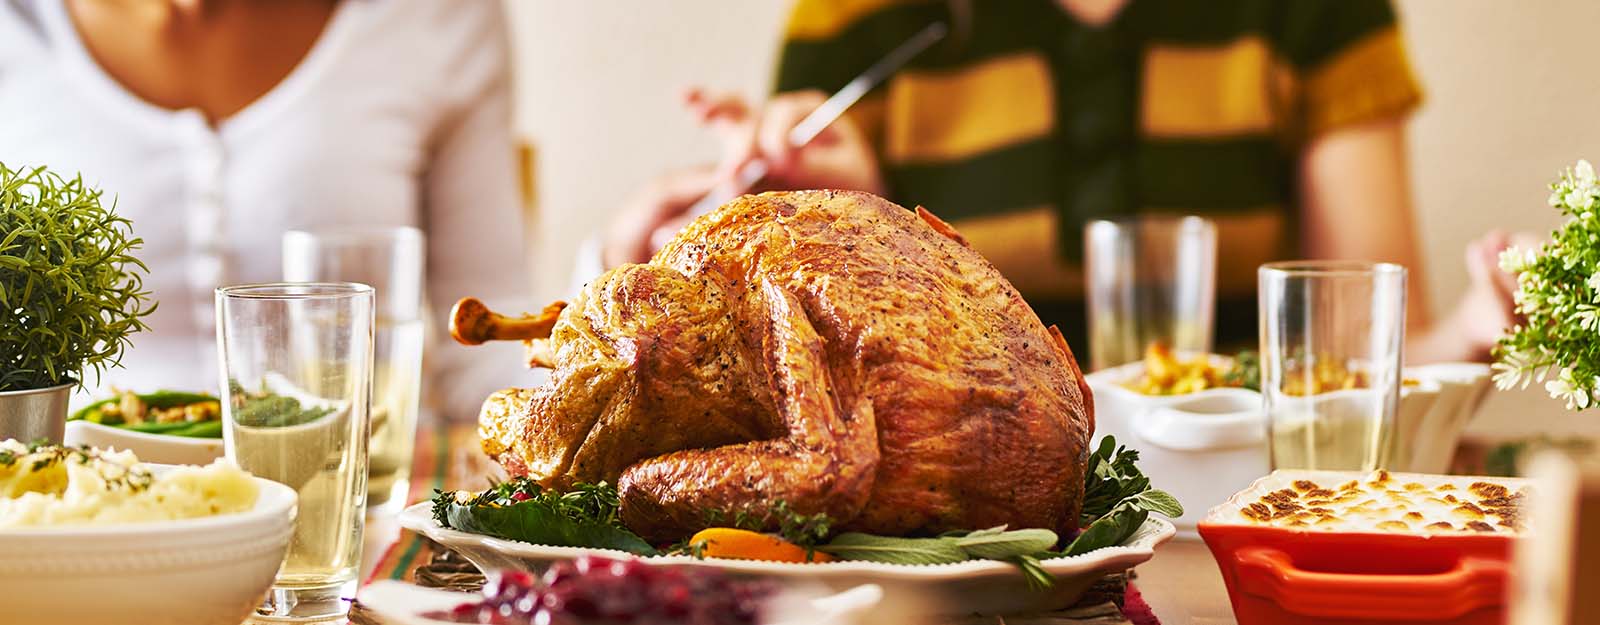 Turkey at dinner table